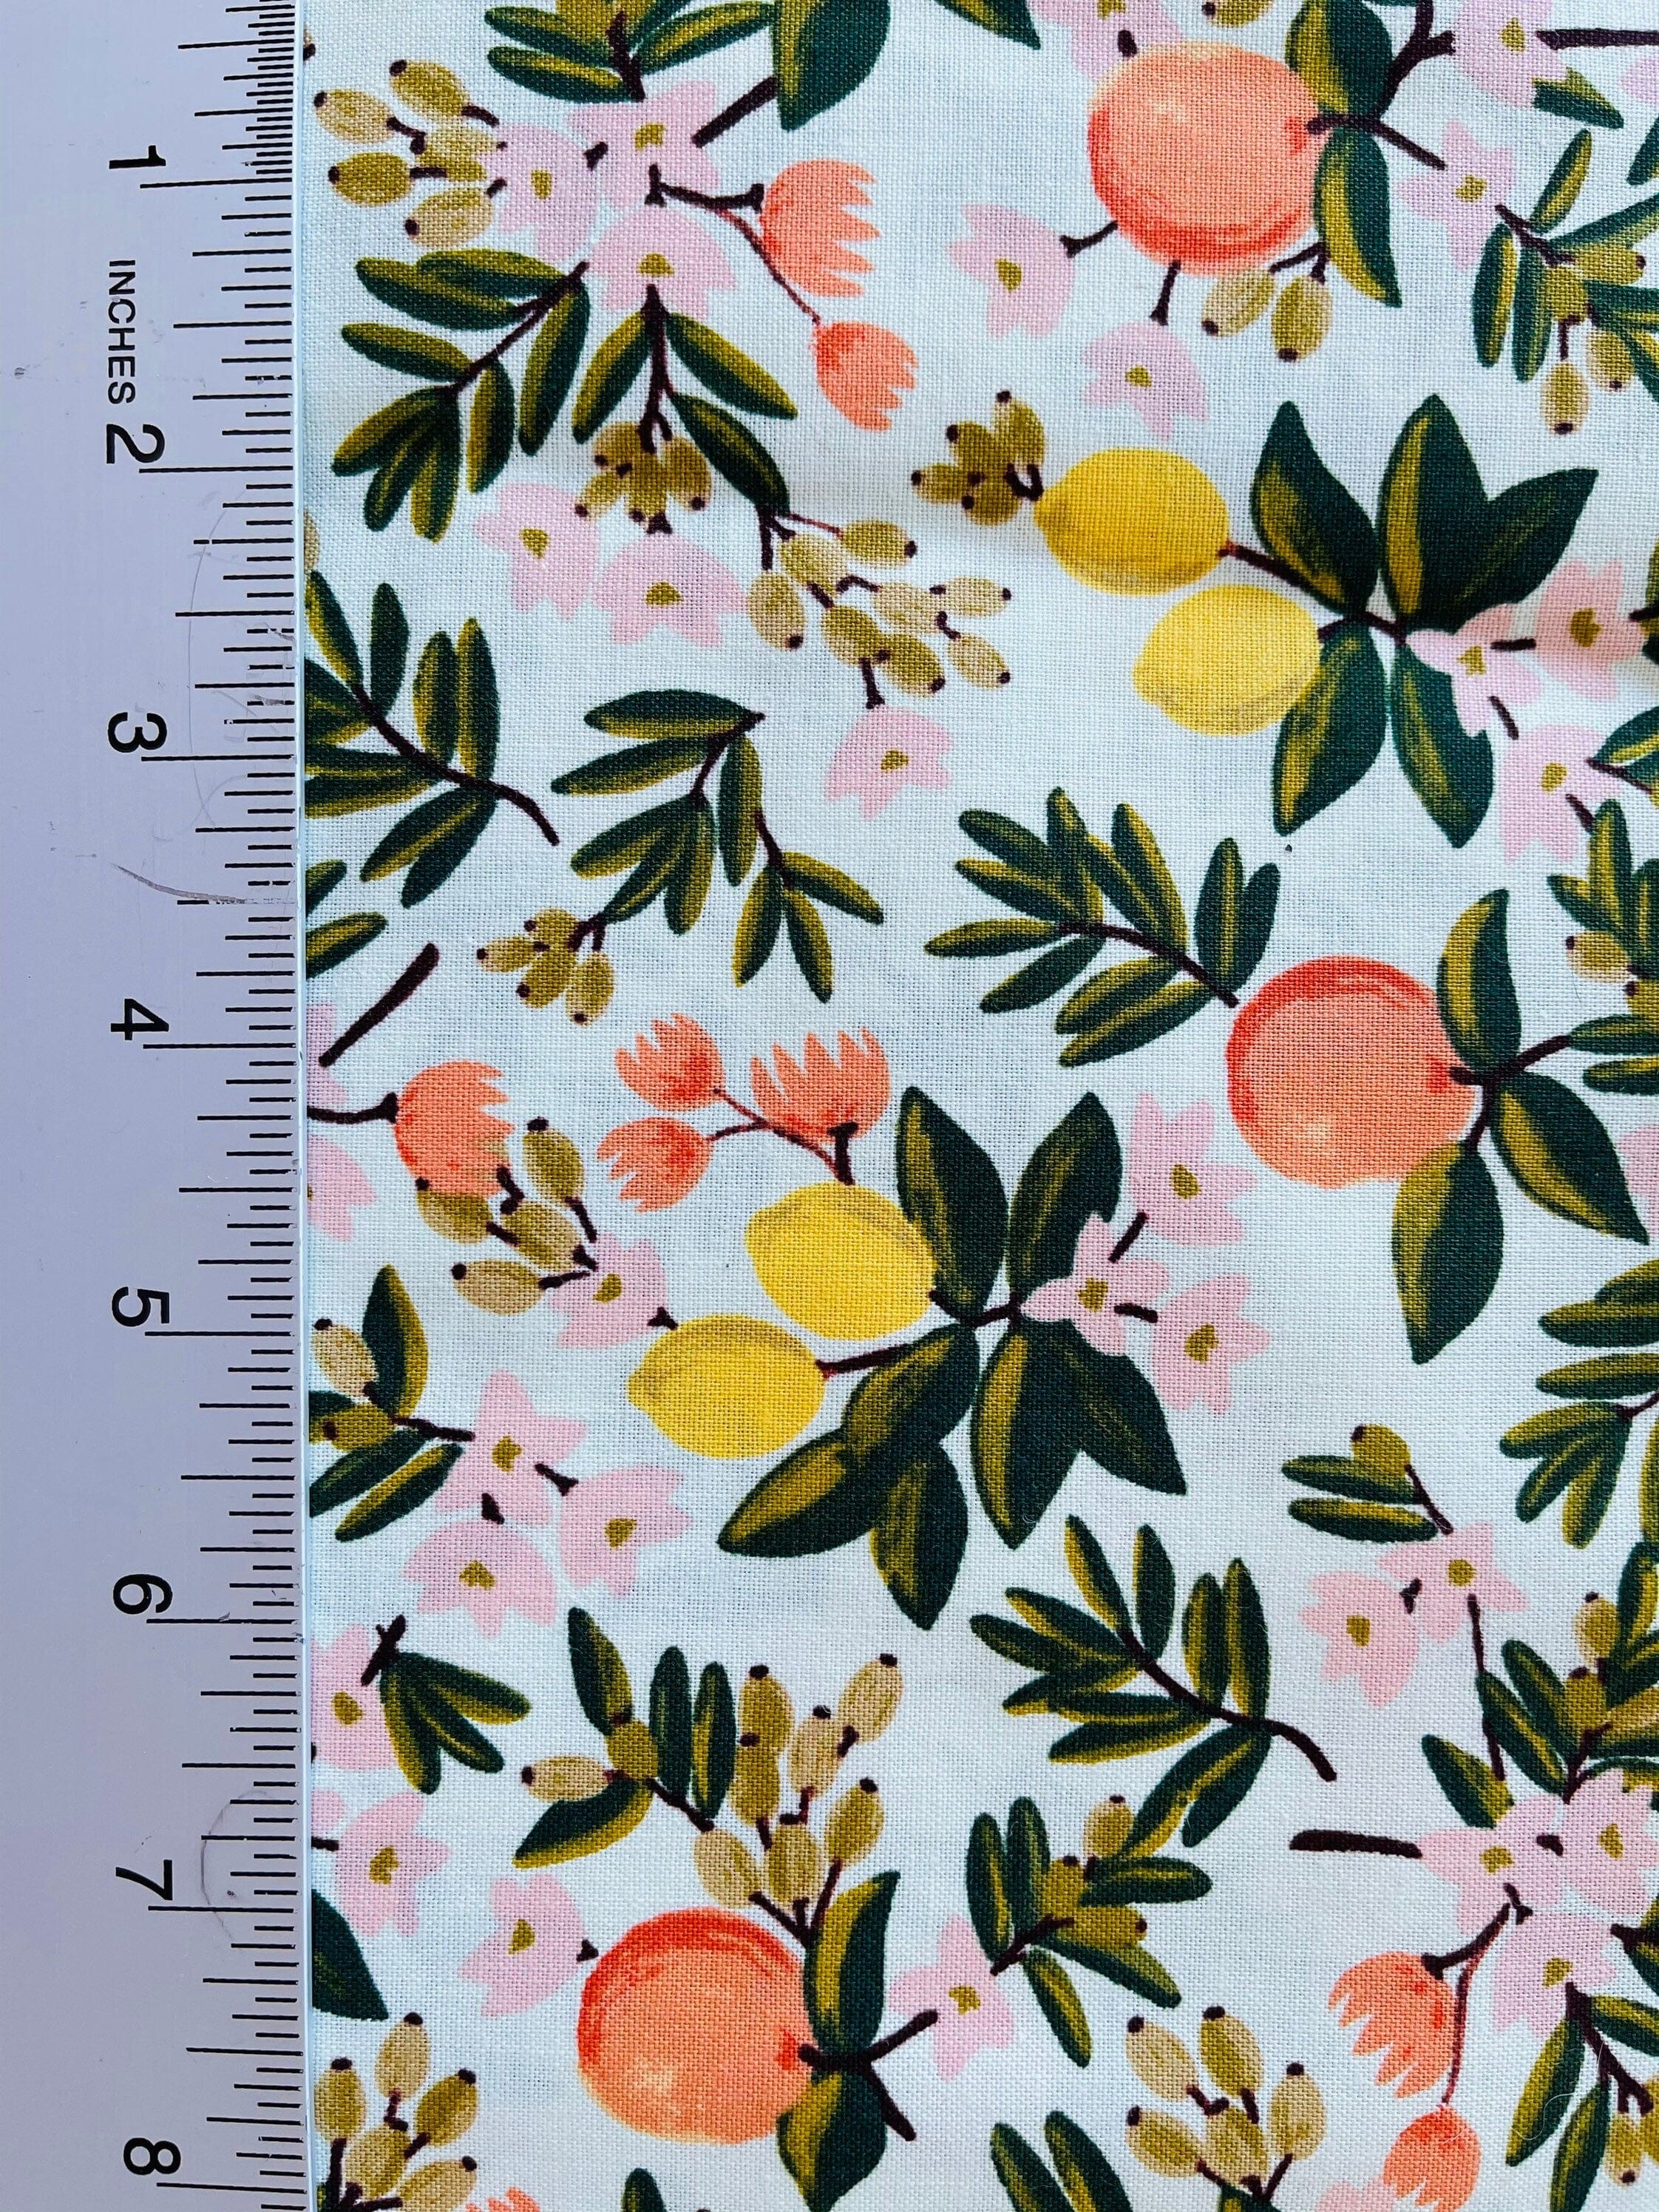 Primavera - Citrus Floral - Mint Fabric - Rifle Paper Co  - Cotton + Steel - Quilting Cotton Fabric - RP300-MI2